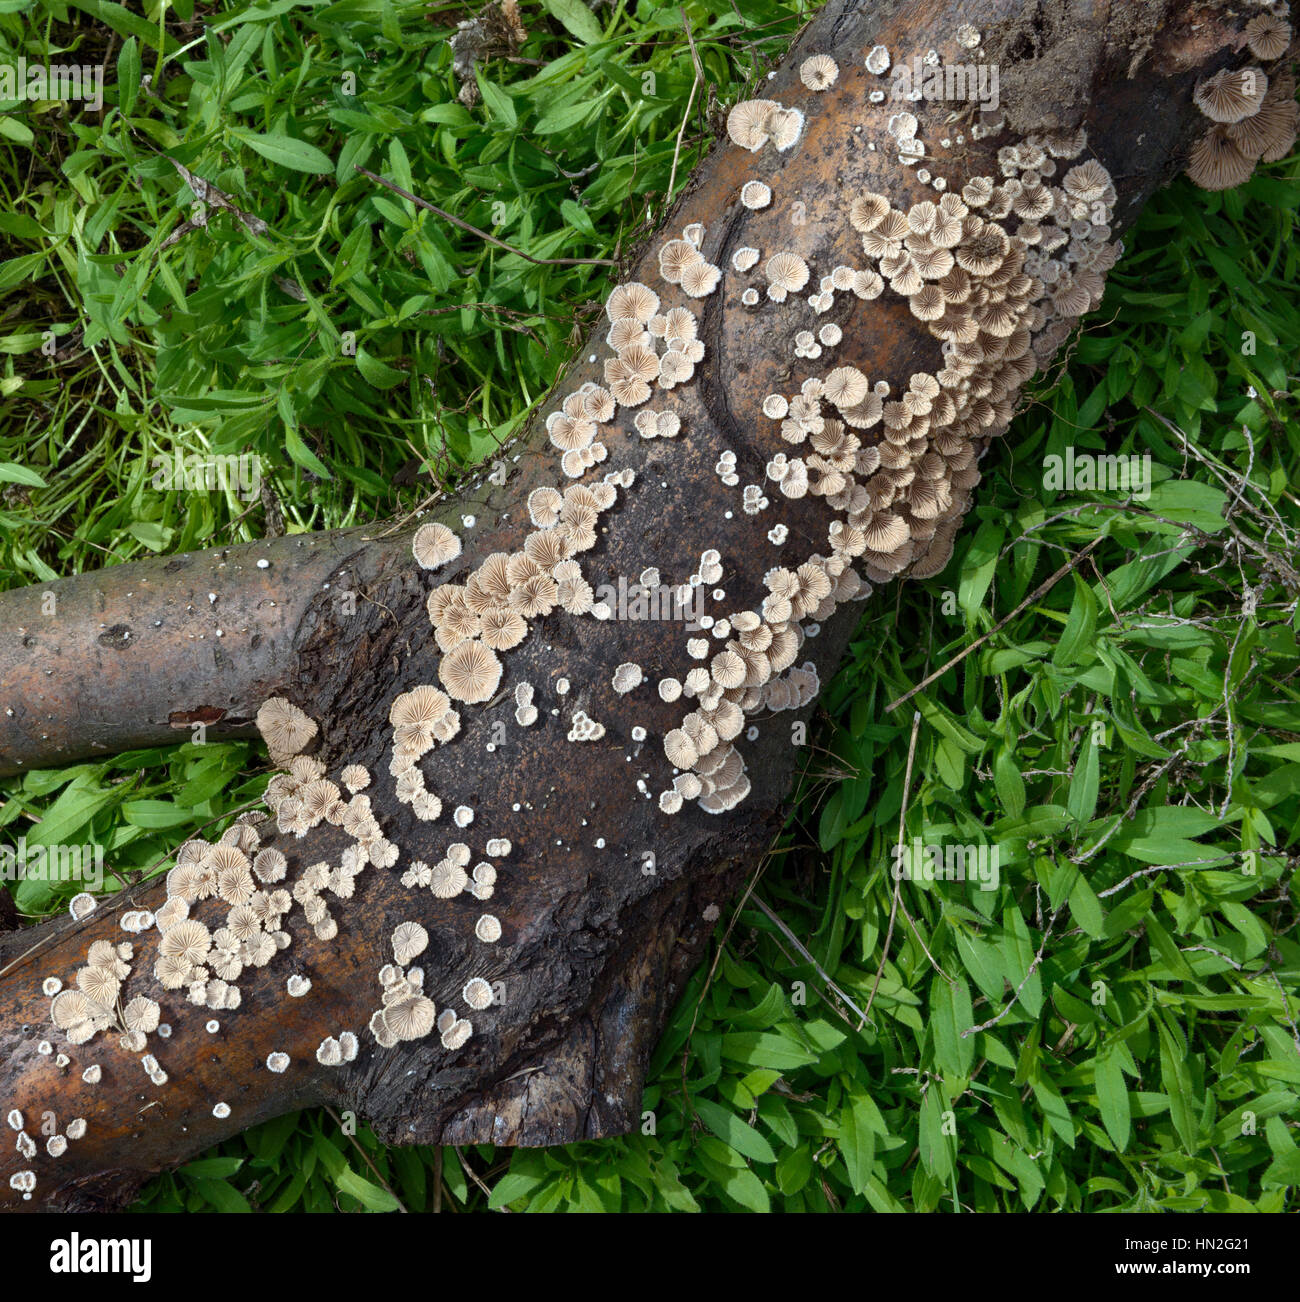 Clusters of many split gill (Schizophyllum commune) mushrooms on fallen tree branch. Stock Photo